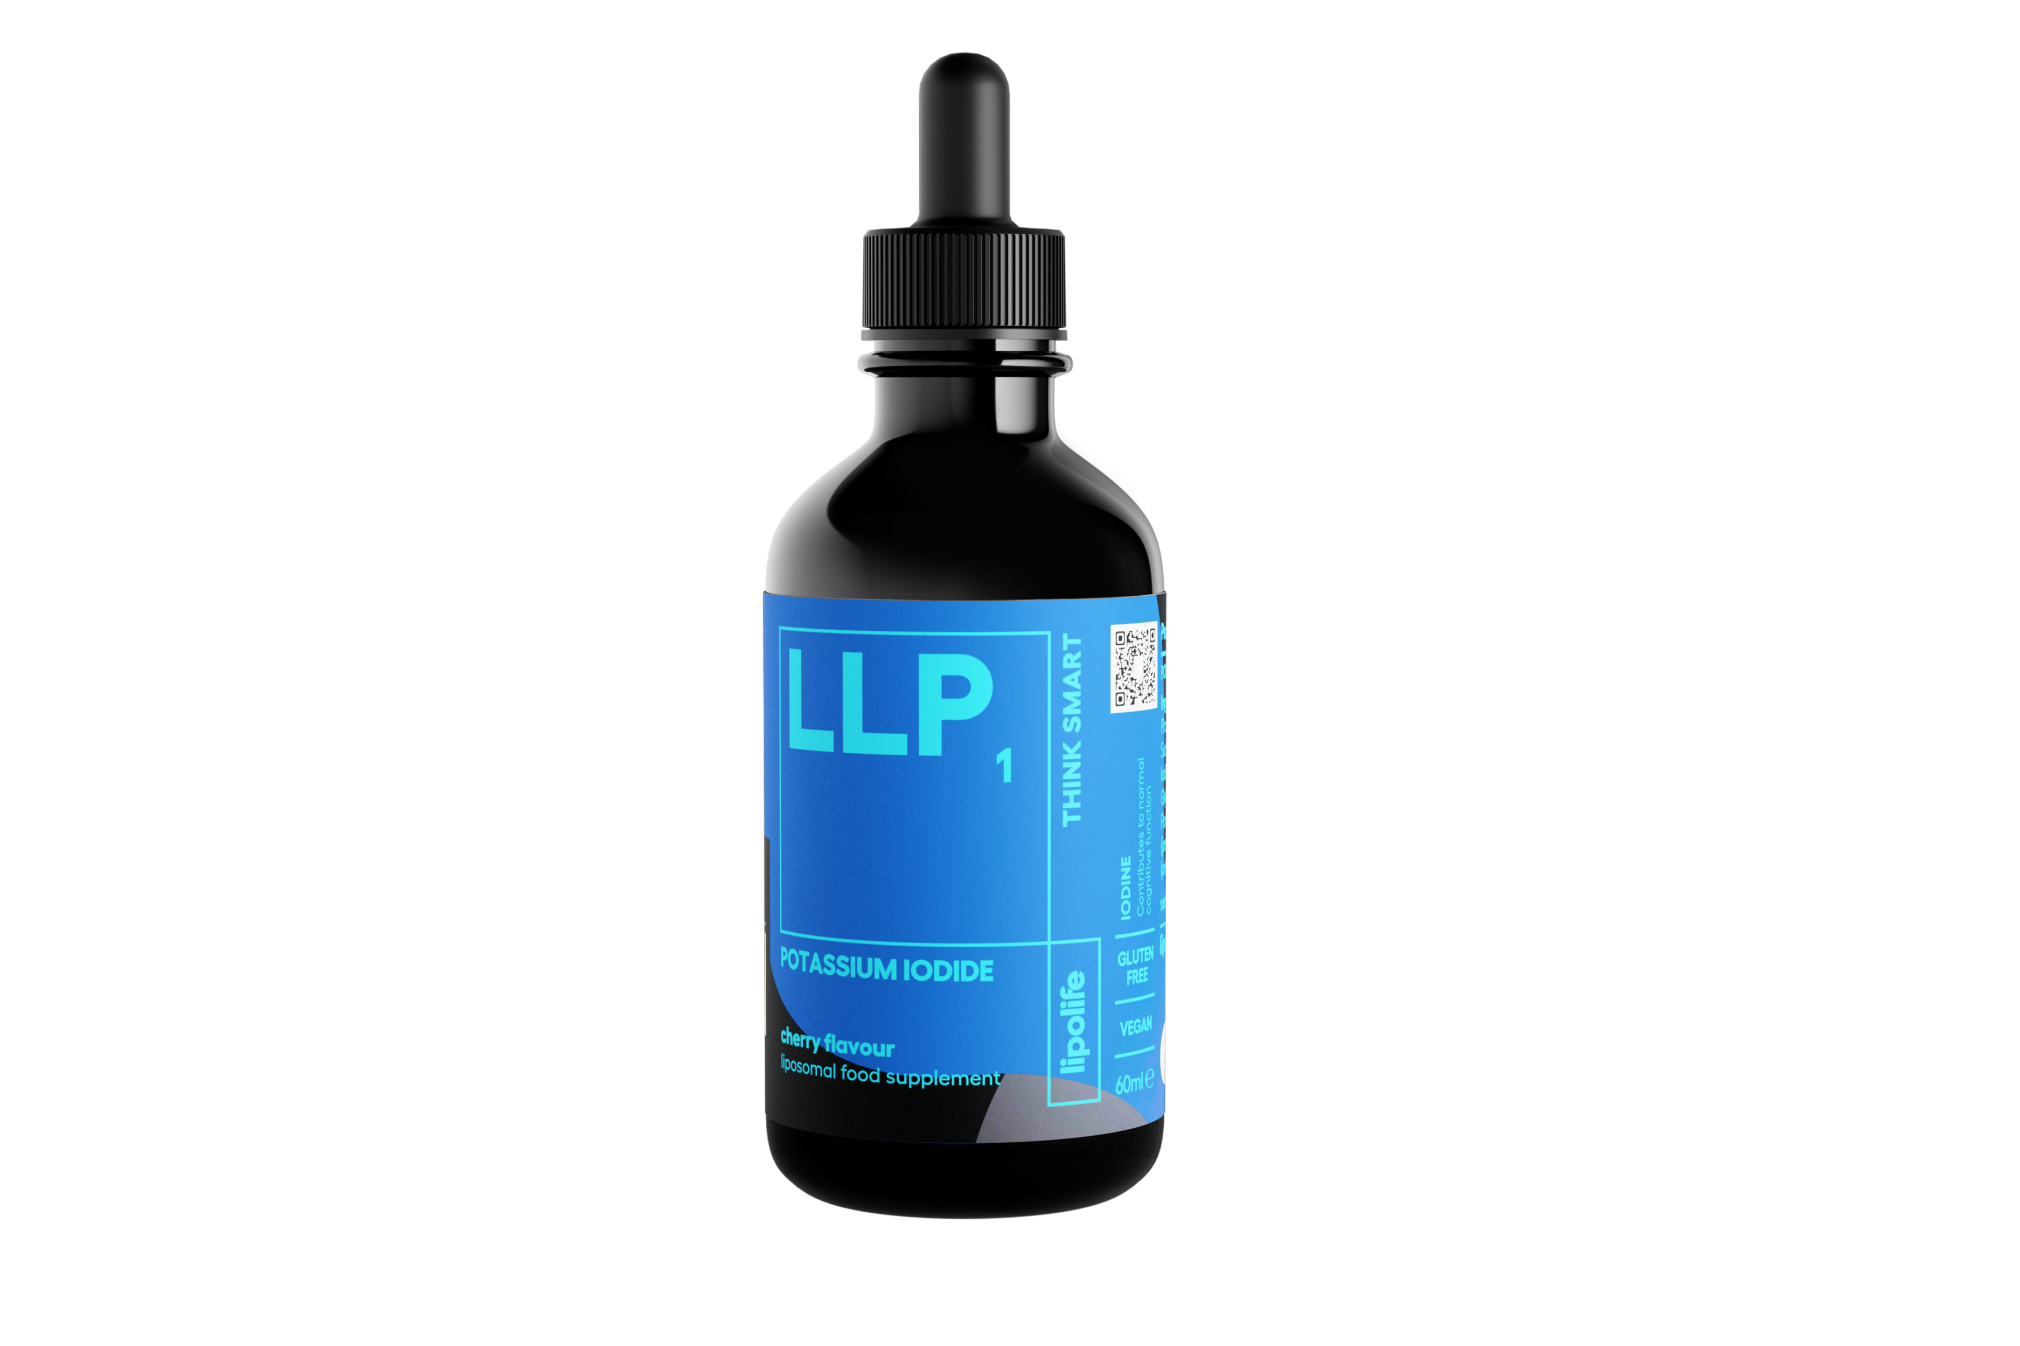 LLP1 Potassium Iodide Cherry Flavour 60ml (Liposomal)